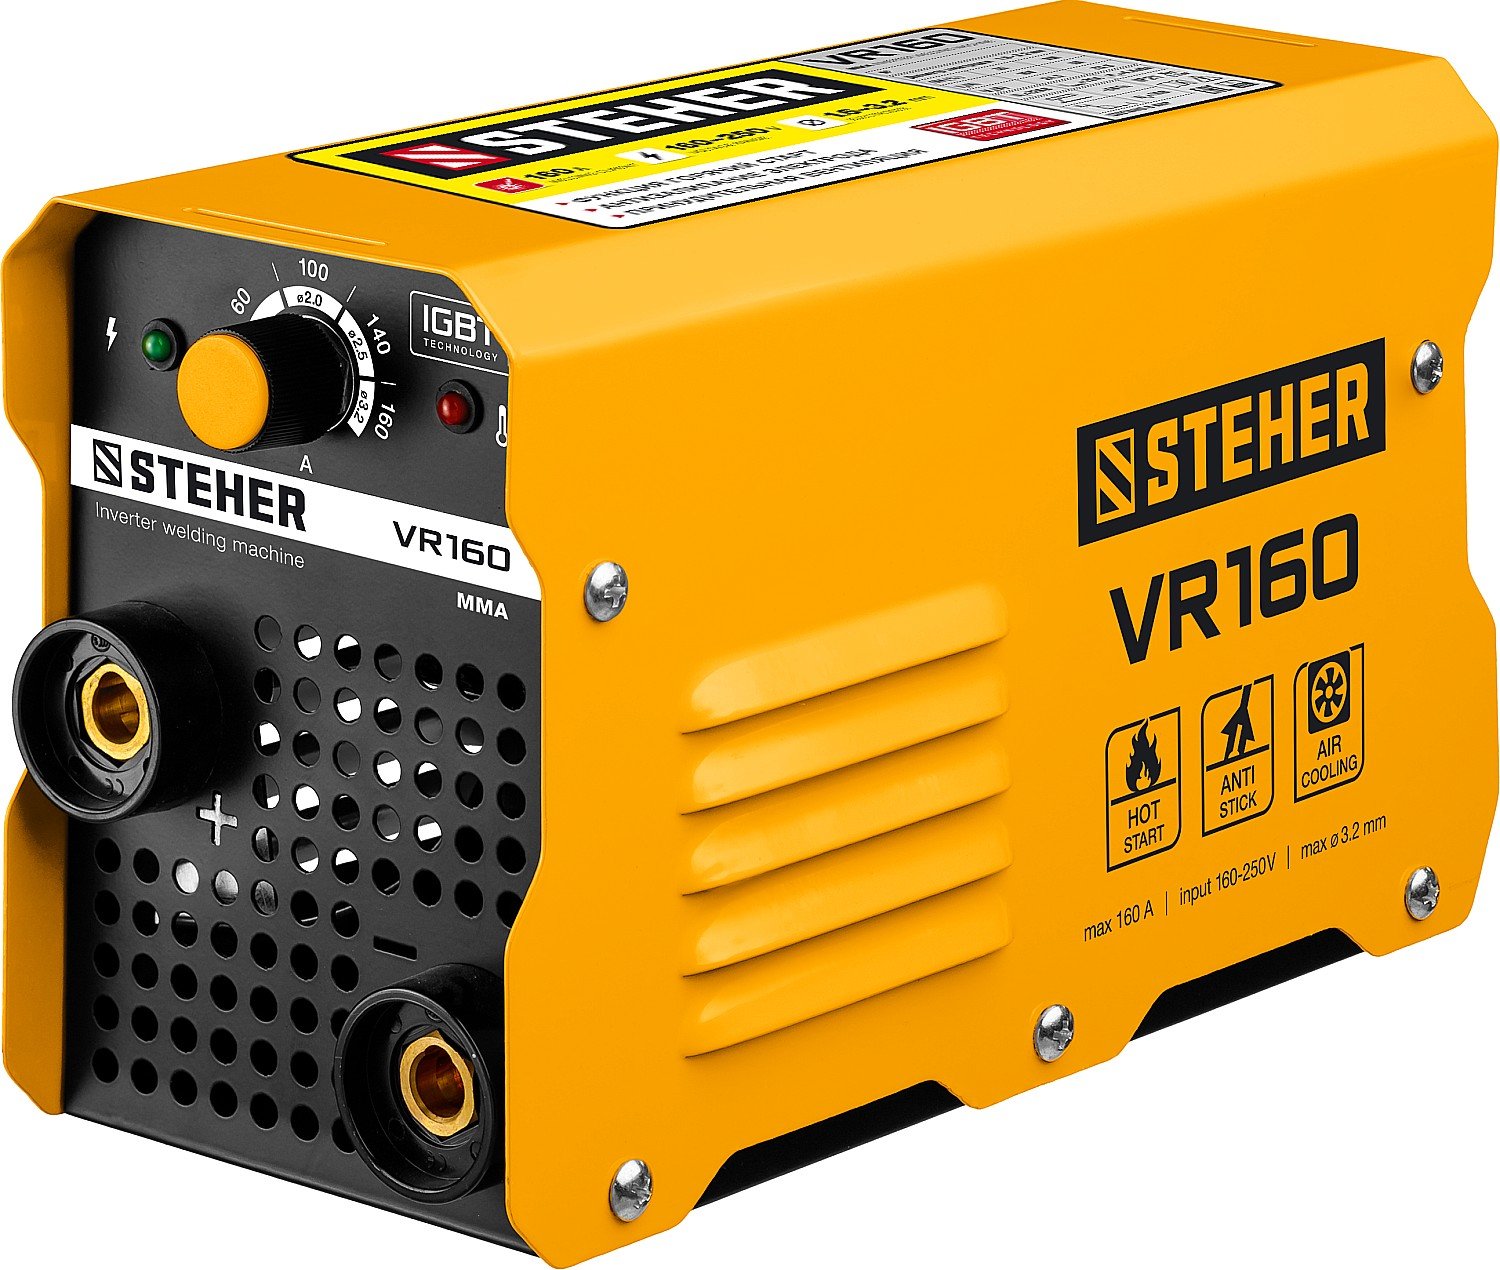  STEHER 160   (VR-160)